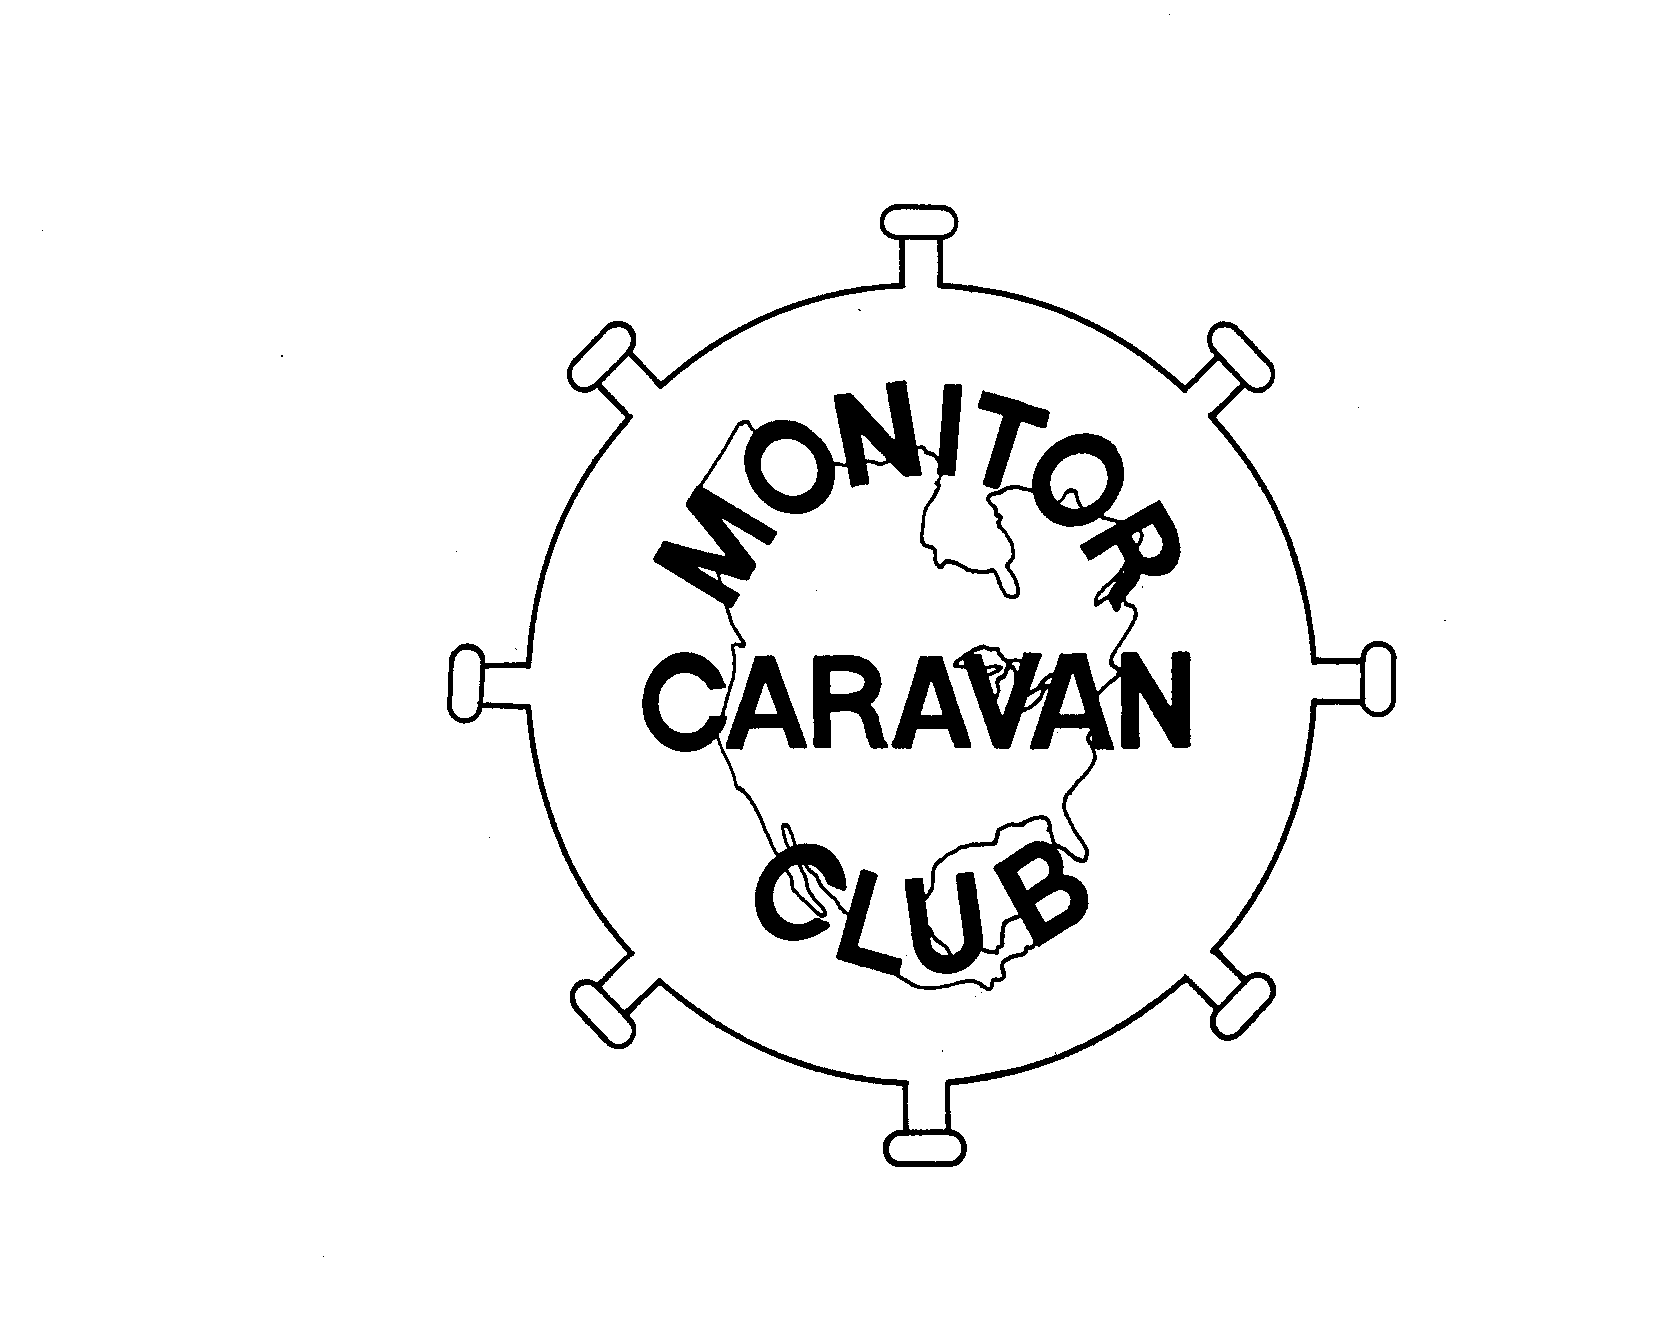  MONITOR CARAVAN CLUB